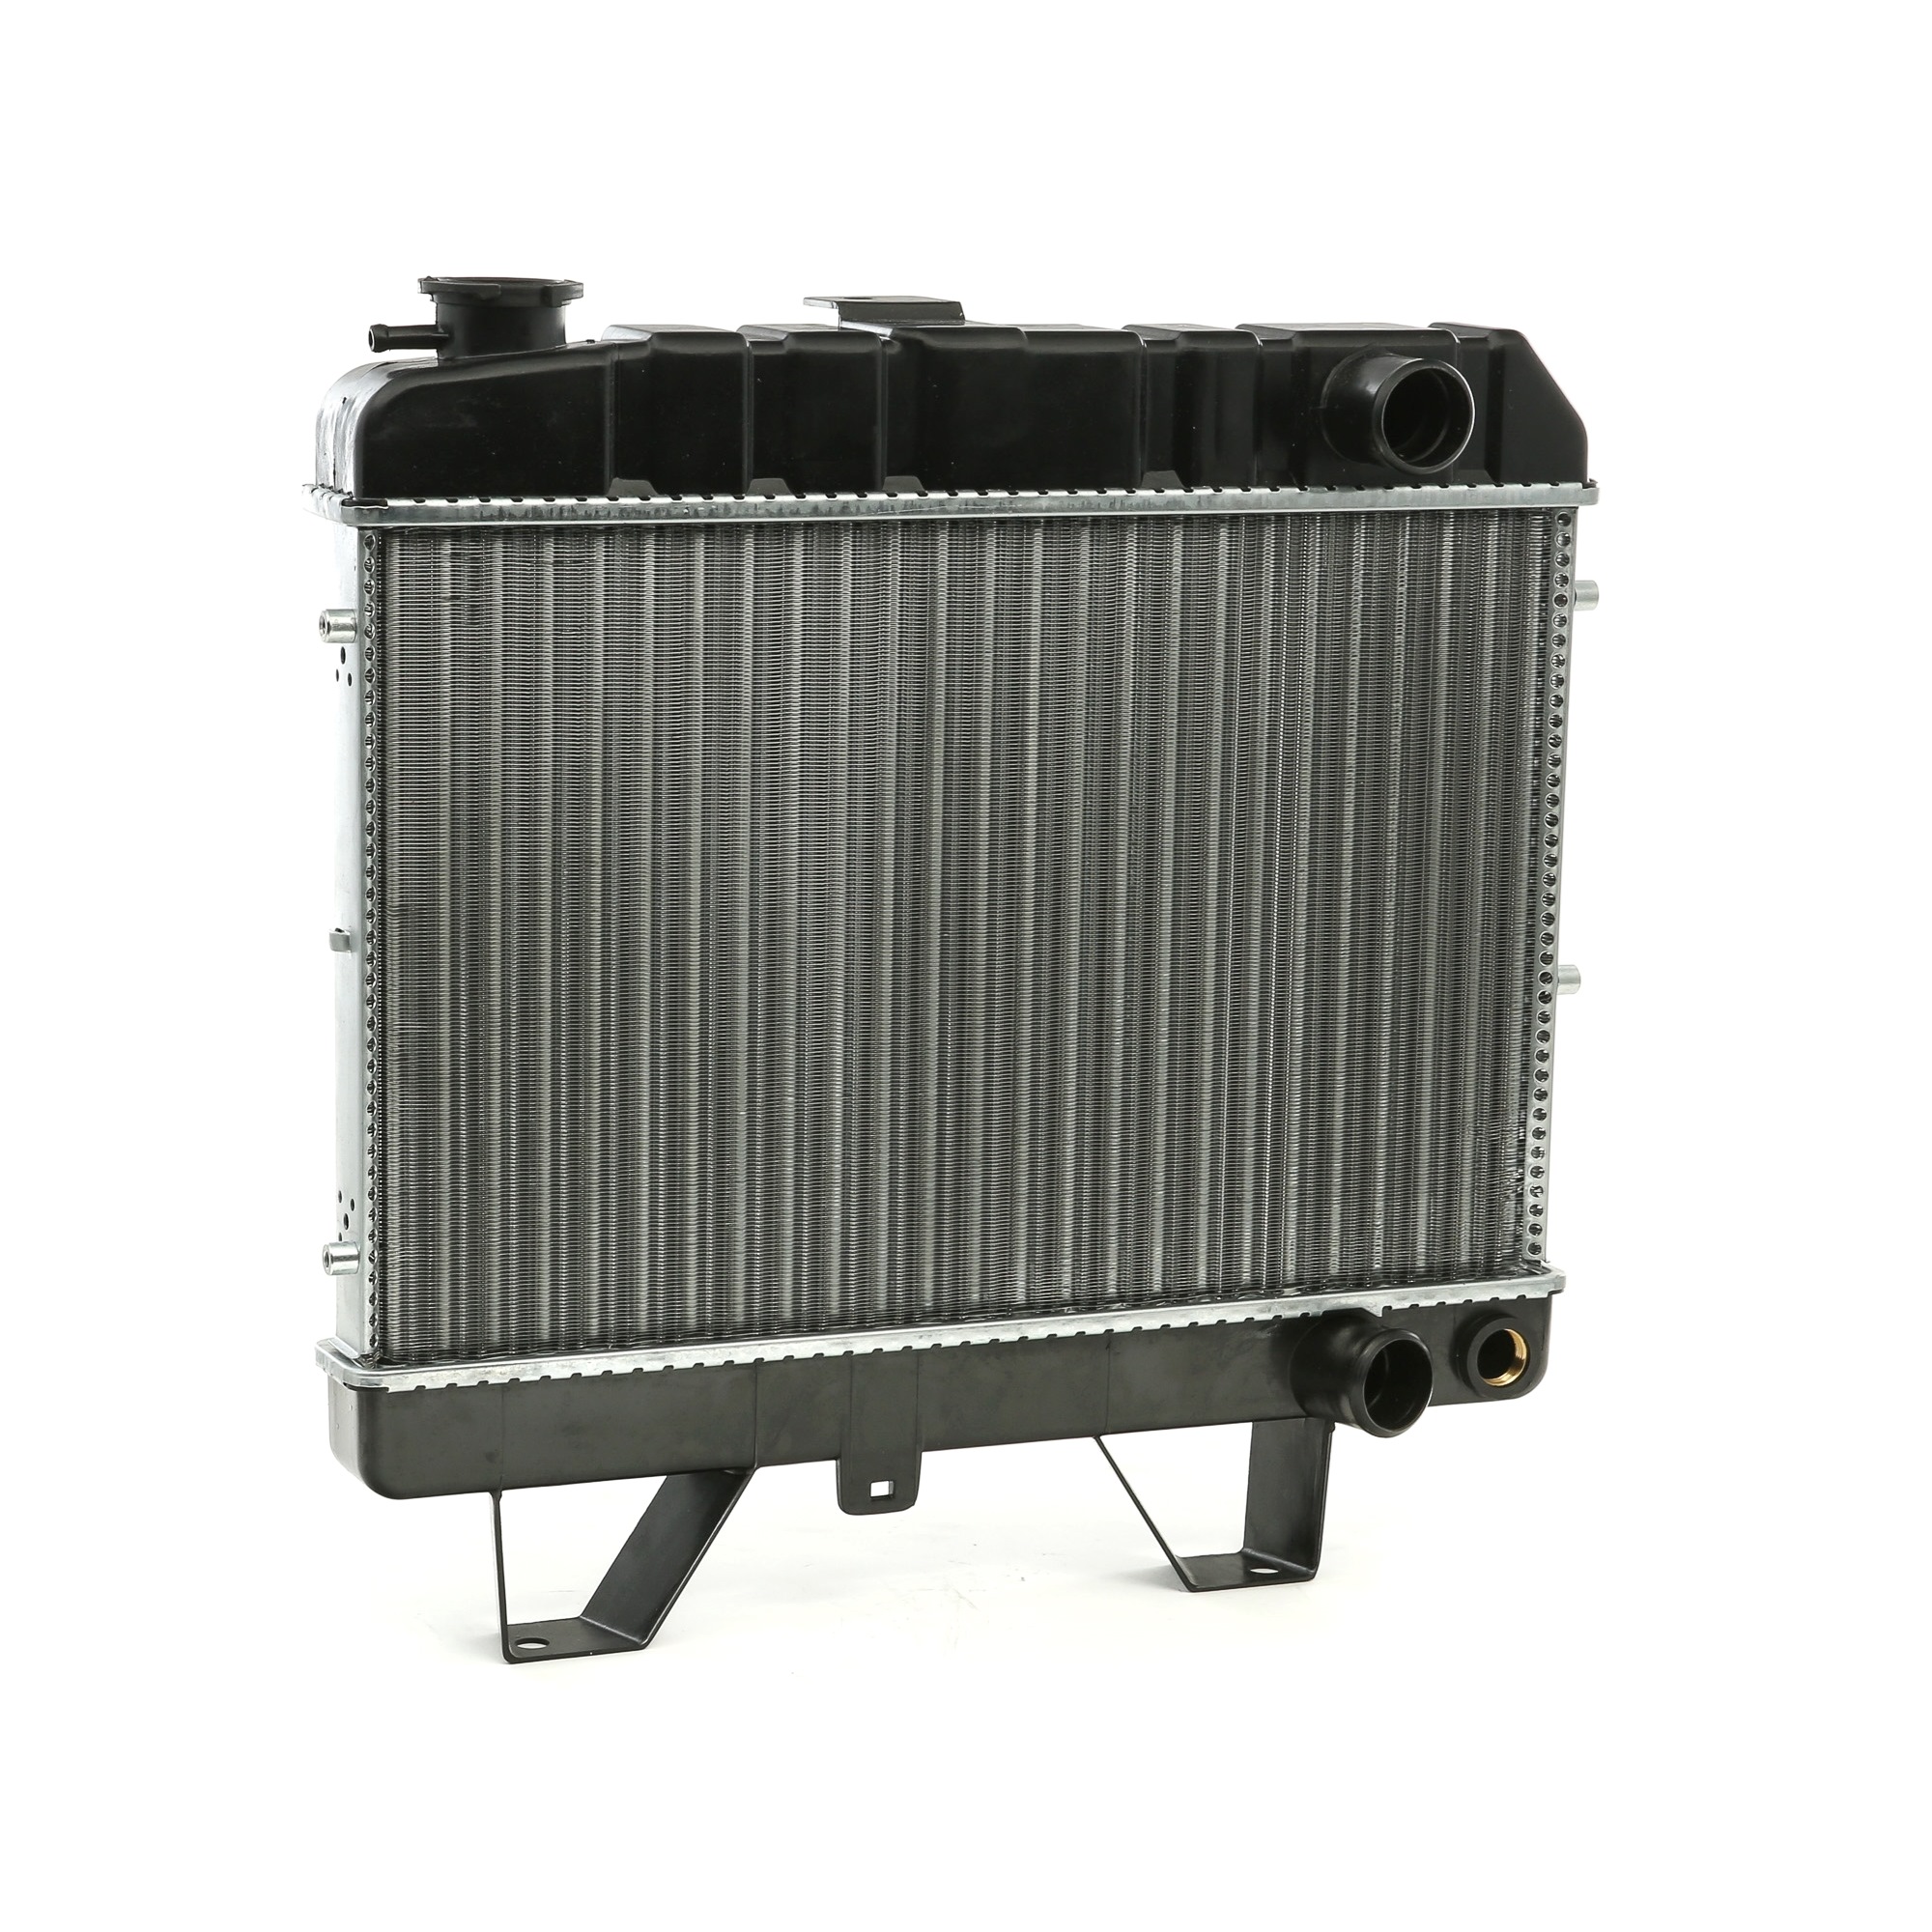 STARK SKRD-0120368 Engine radiator Aluminium, Plastic, 470 x 290 x 34 mm, Brazed cooling fins